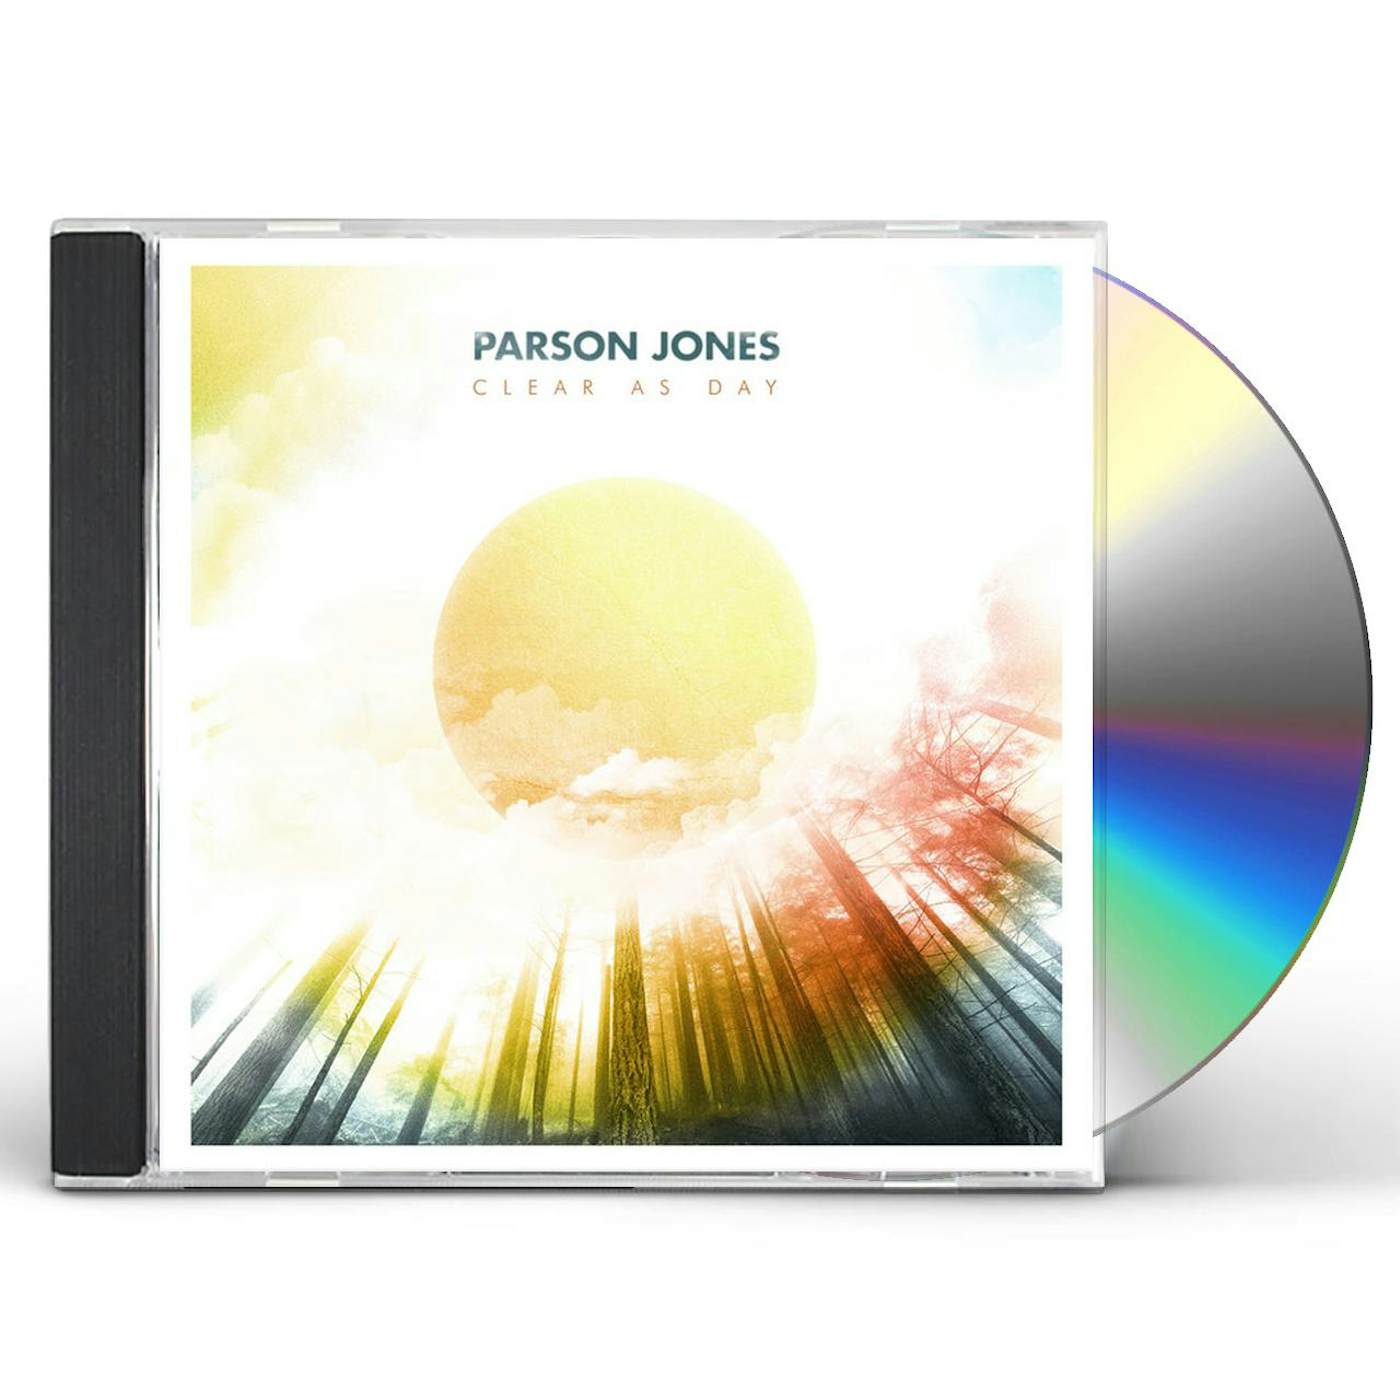 Parson Jones CLEAR AS DAY CD